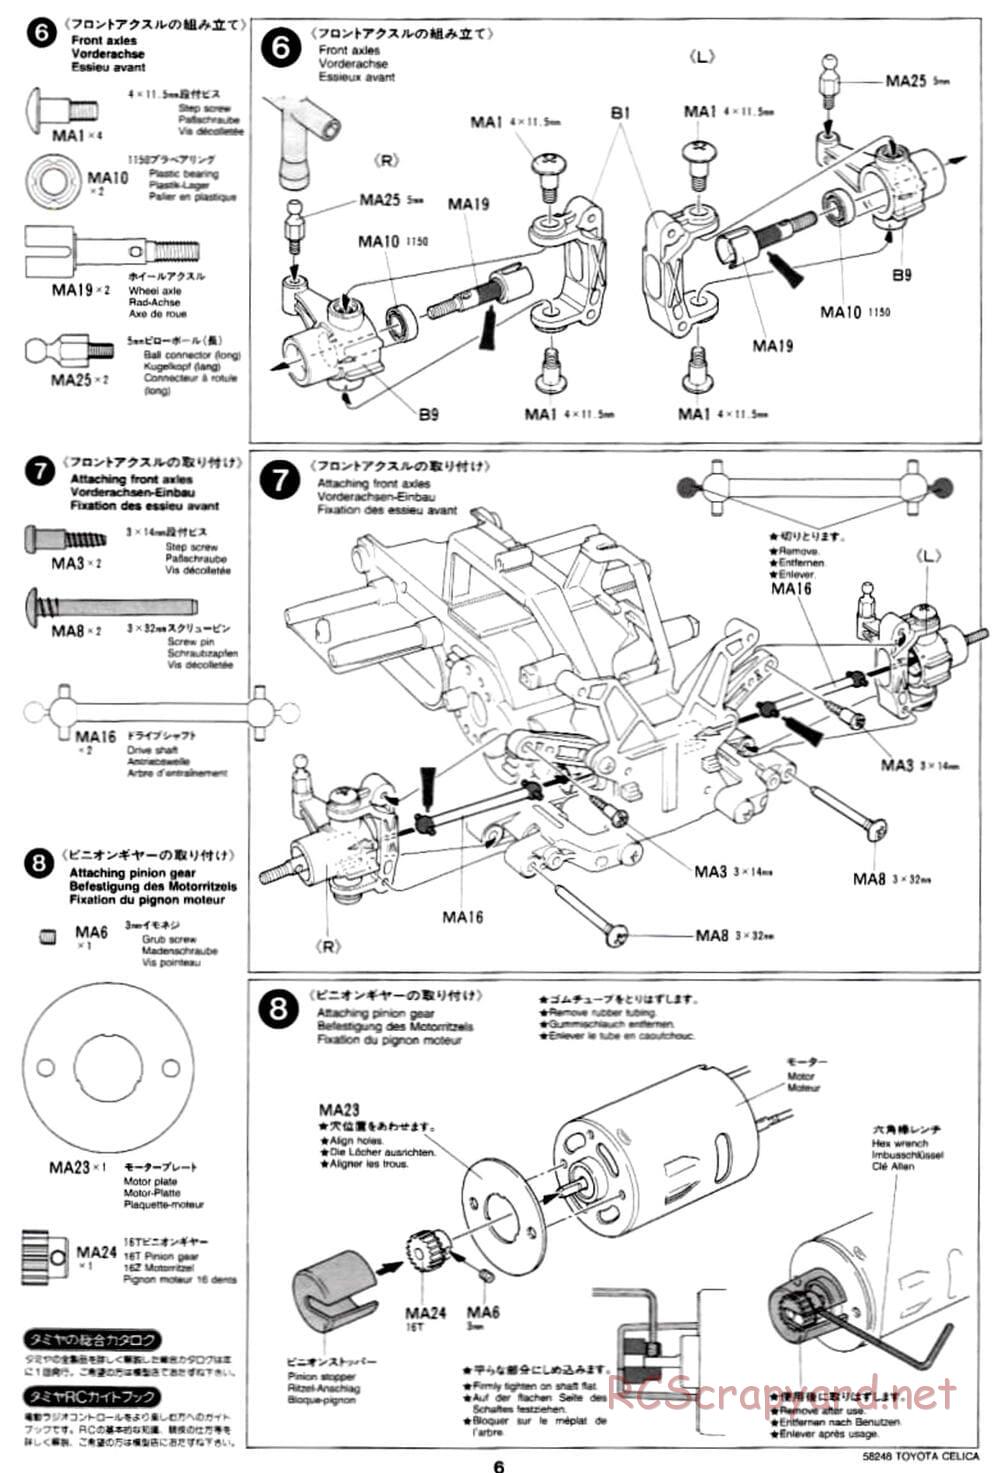 Tamiya - Toyota Celica - FF-02 Chassis - Manual - Page 6